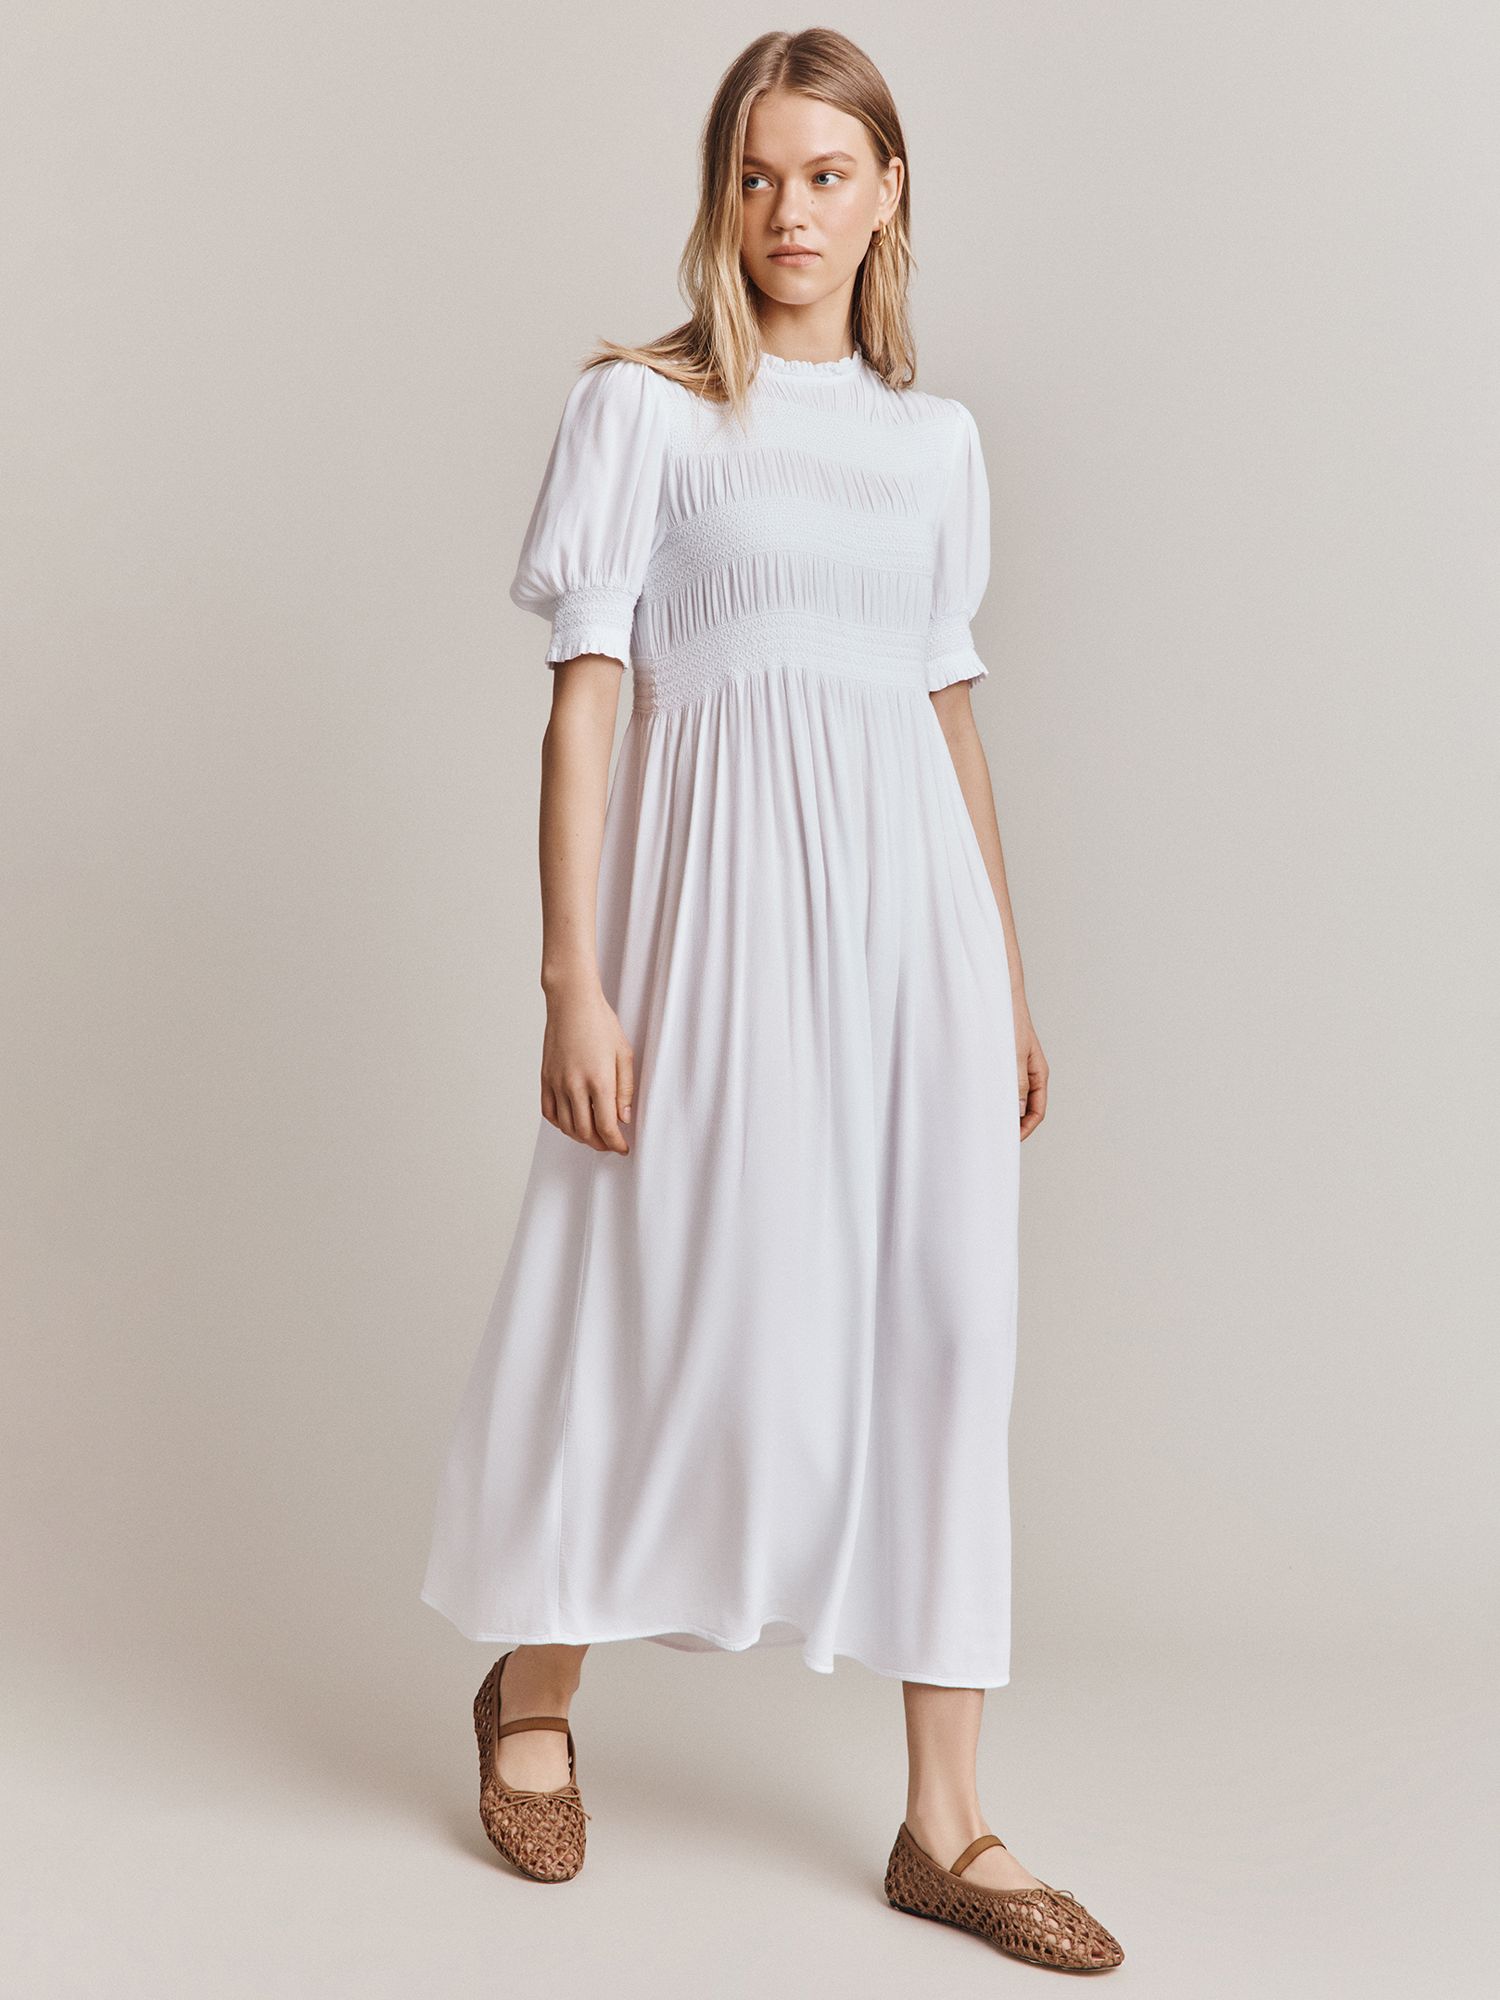 Ghost Eloise Midi Dress, White at John Lewis & Partners